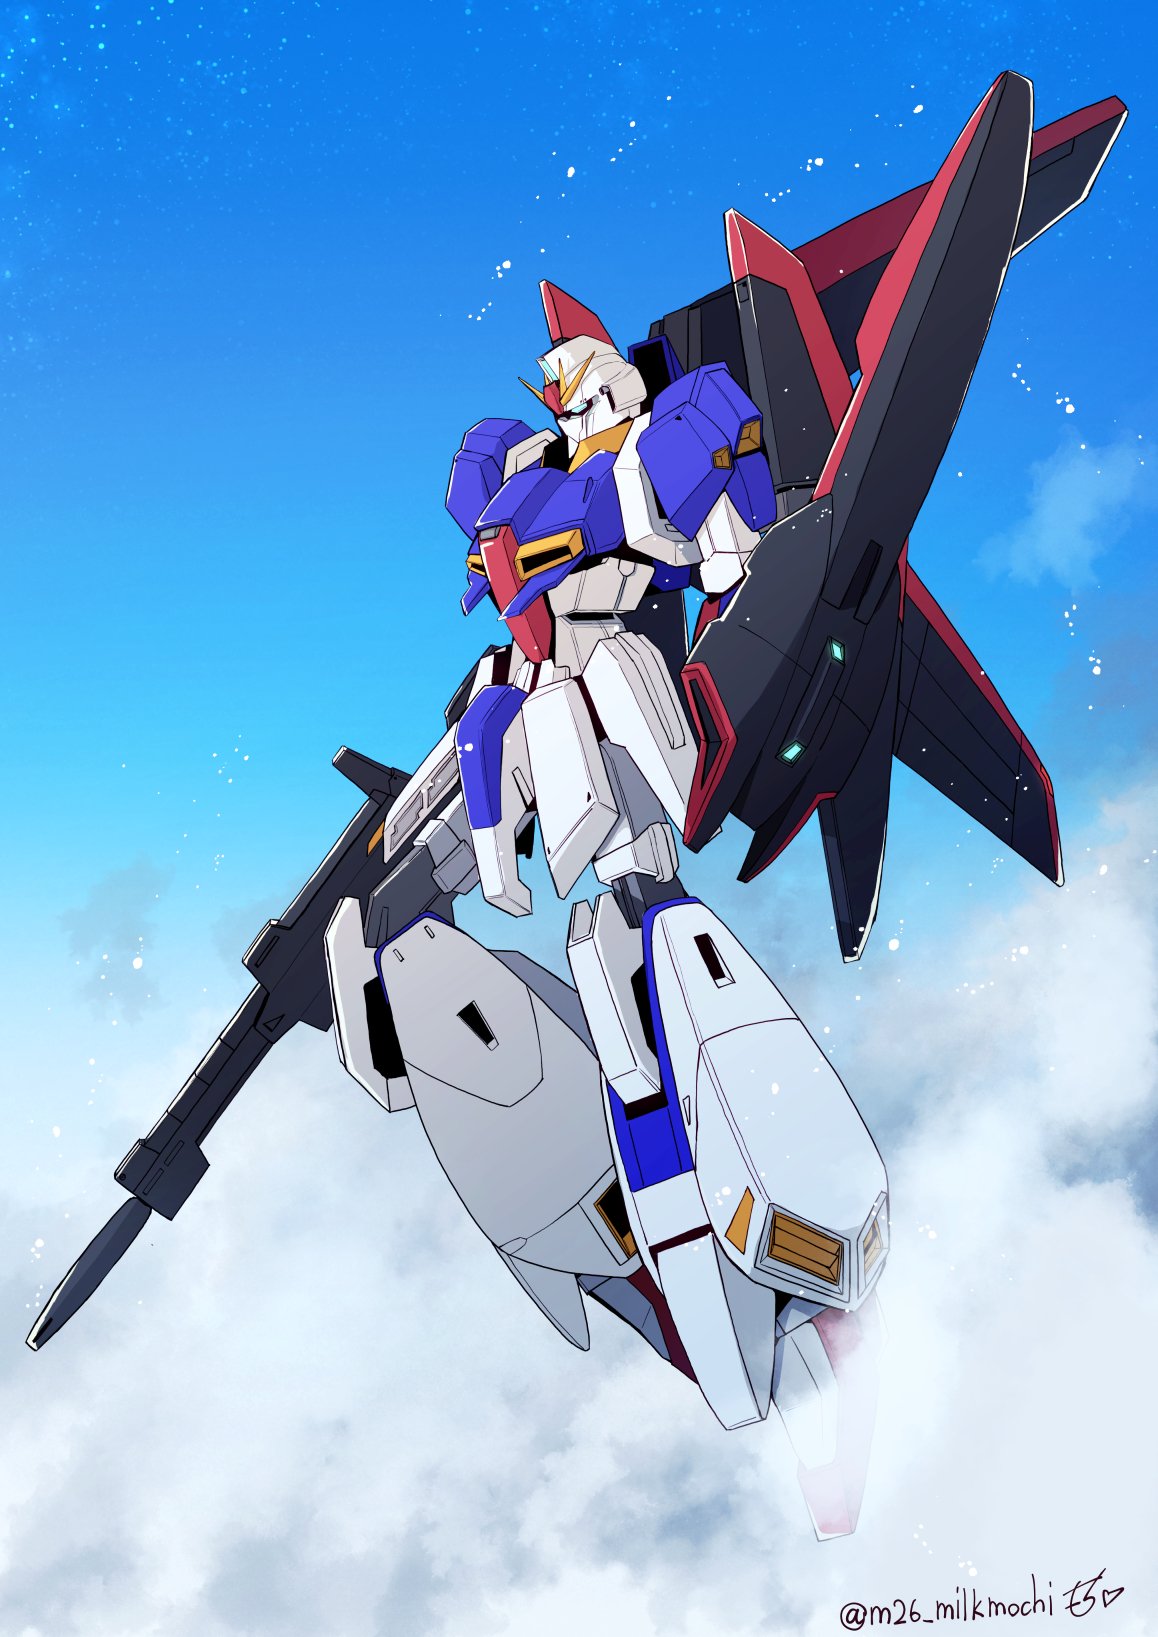 Anime 1158x1637 anime mechs Super Robot Taisen Mobile Suit Zeta Gundam Zeta Gundam Gundam artwork digital art fan art